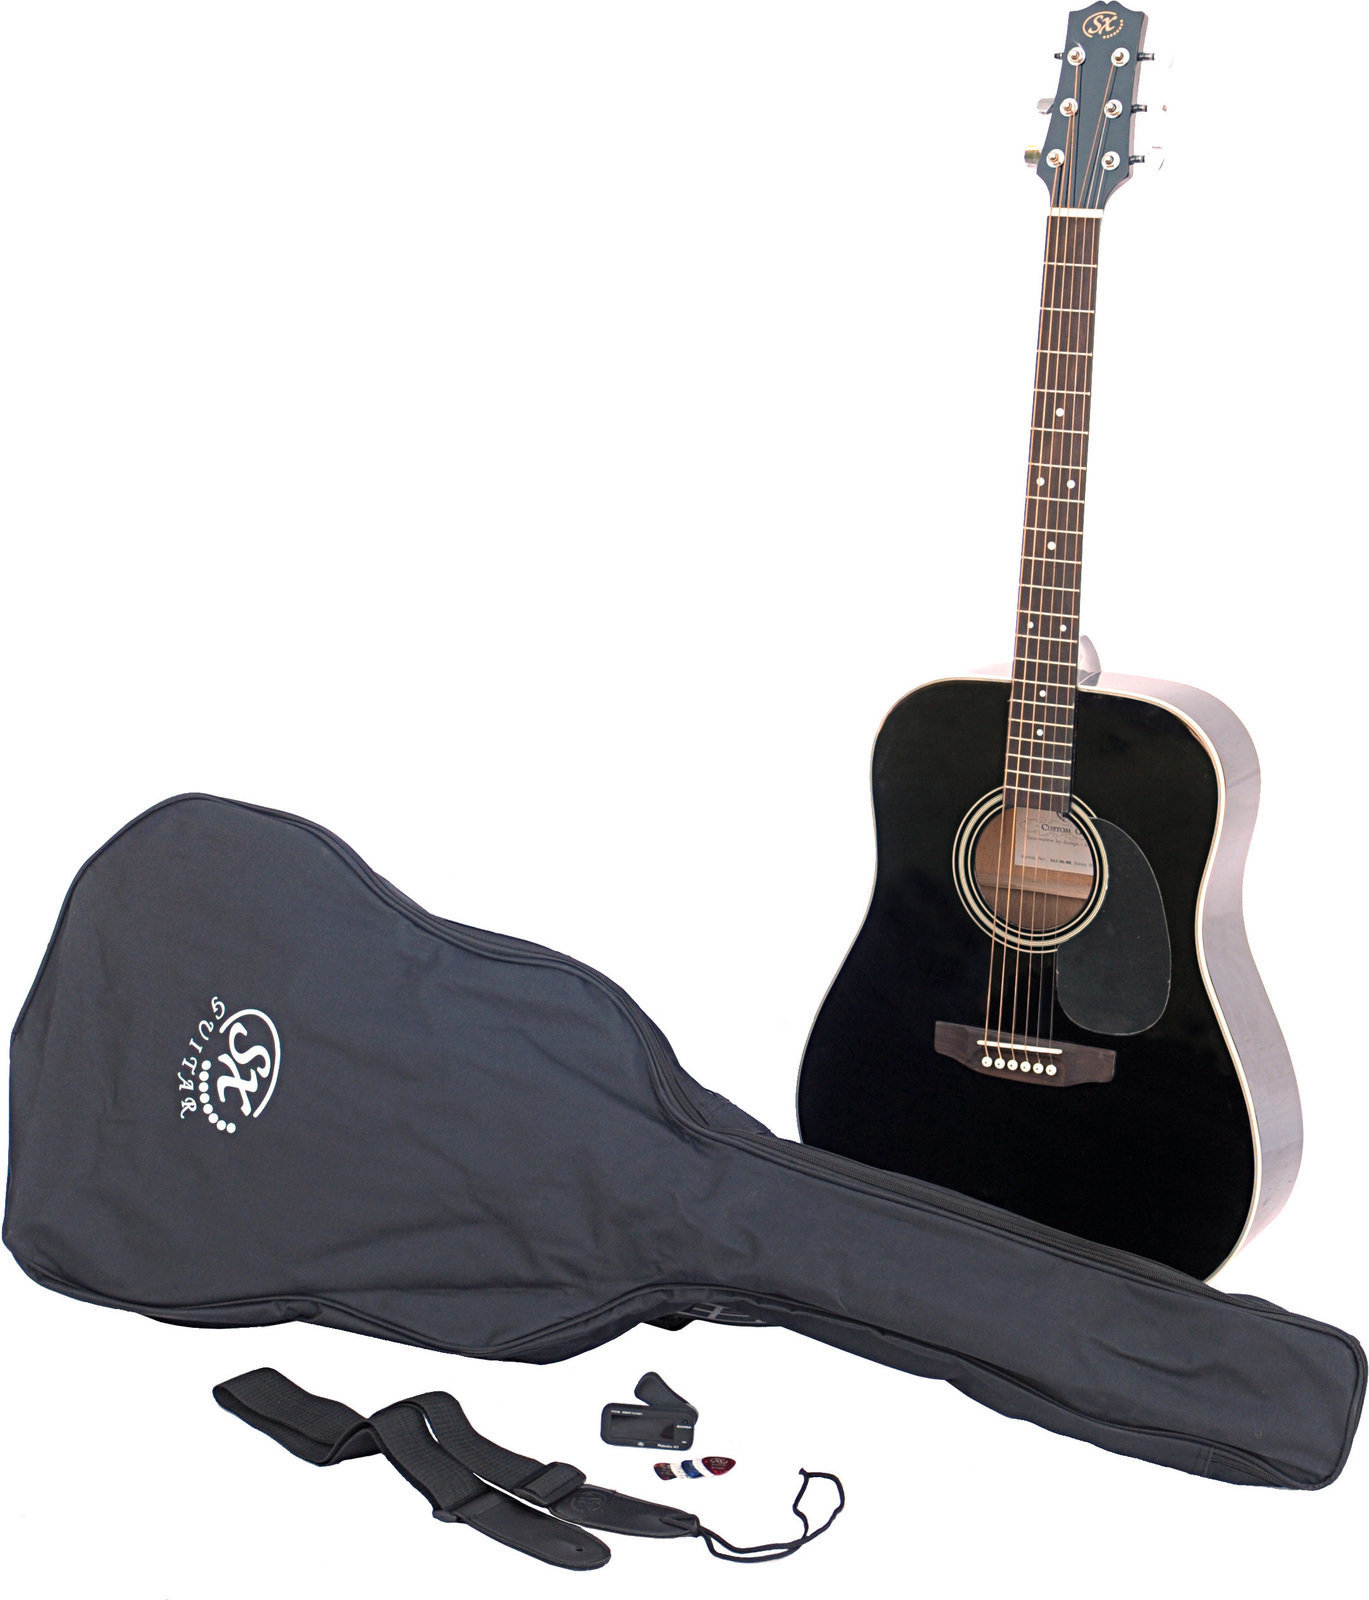 Akustični gitarski setovi SX SA1 Acoustic Guitar Kit Black